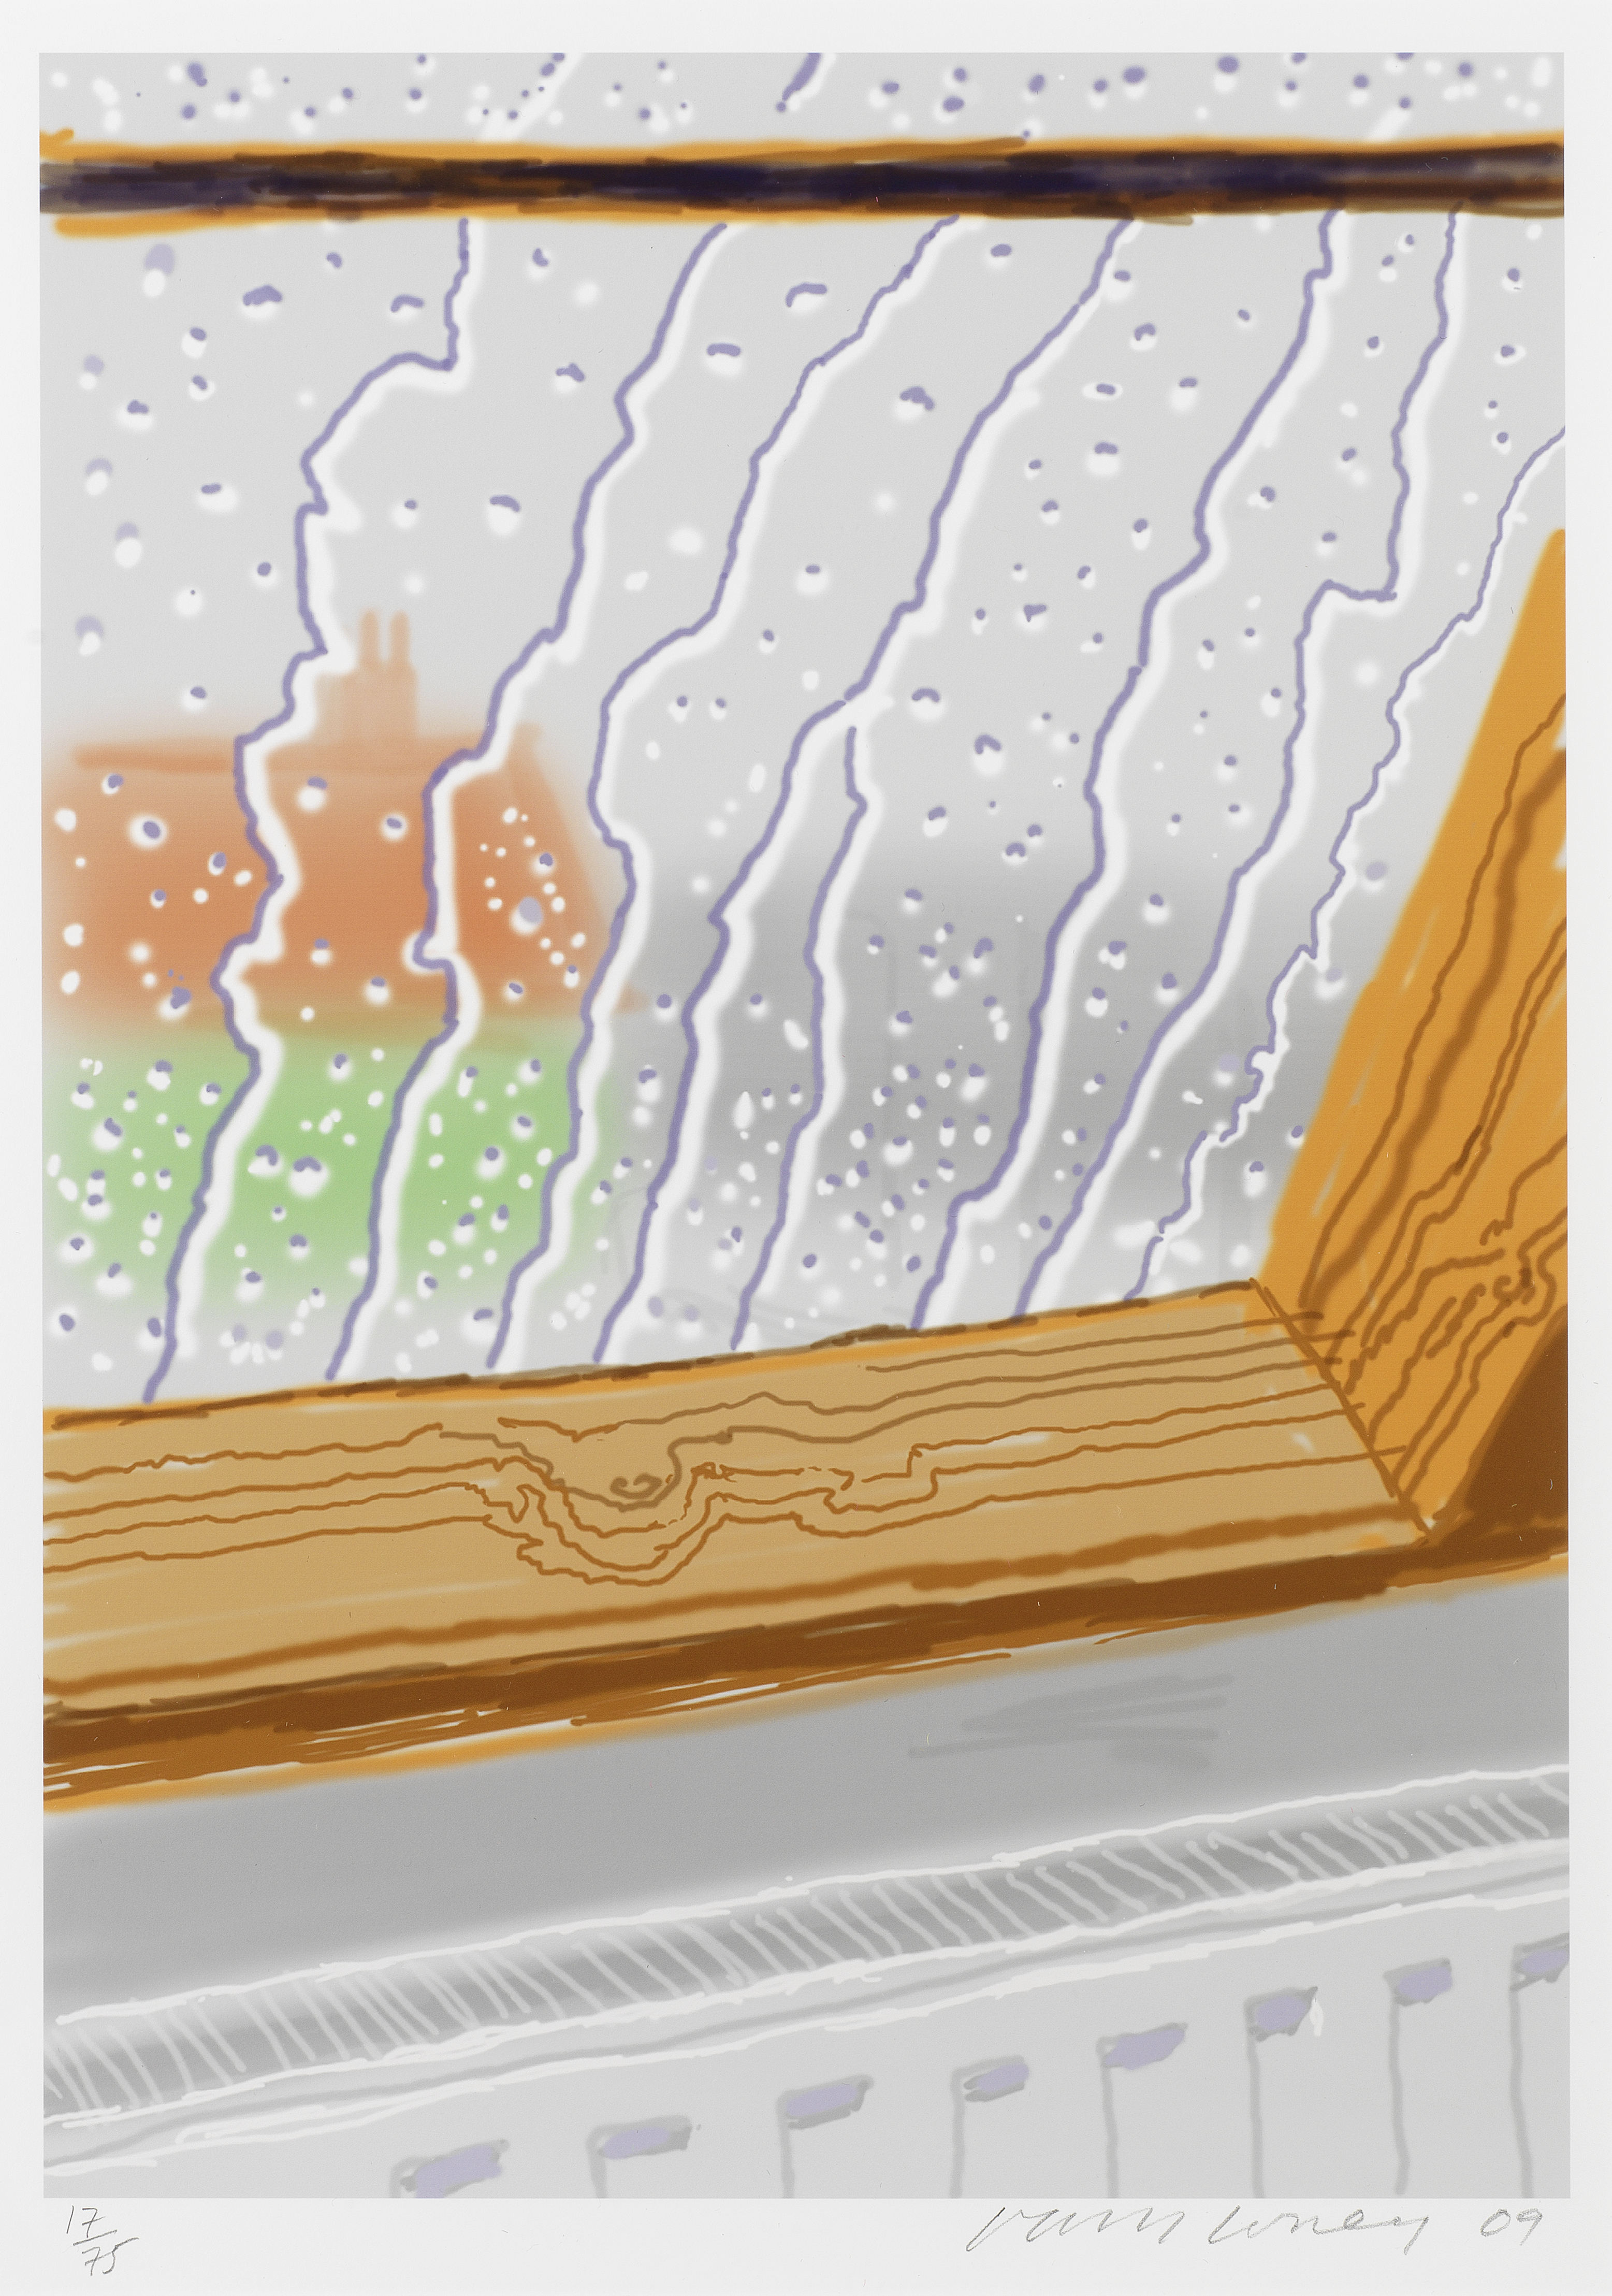 David Hockney R.A. (British, born 1937) Rain on the Studio Window iPad drawing in colours, 2009,...